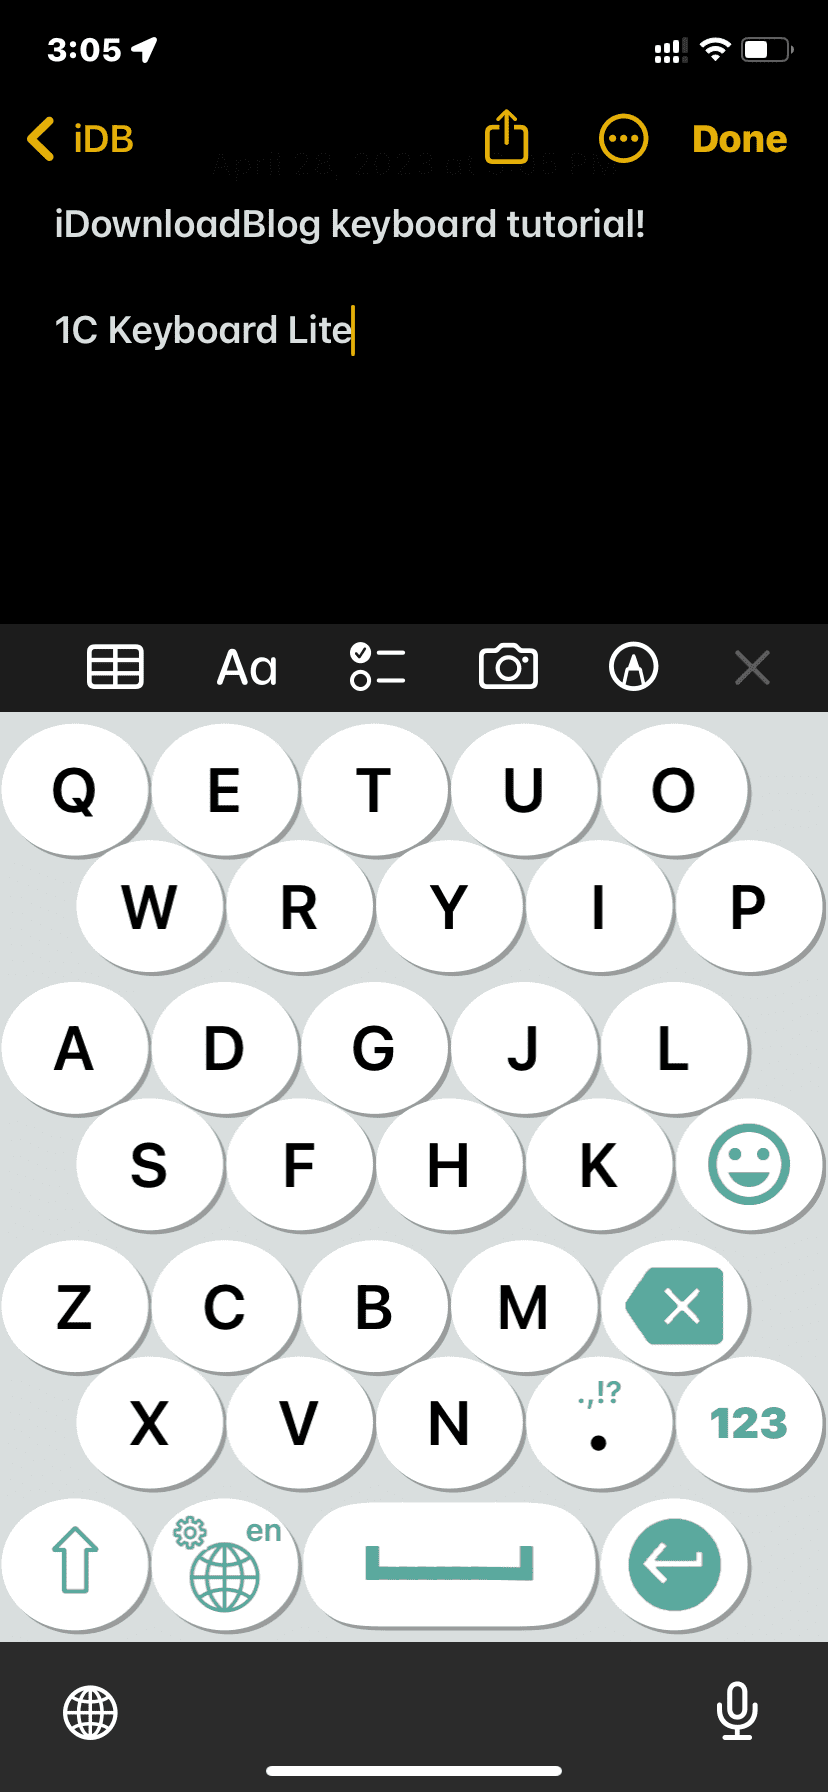 Énorme clavier 1C Keyboard Lite sur iPhone